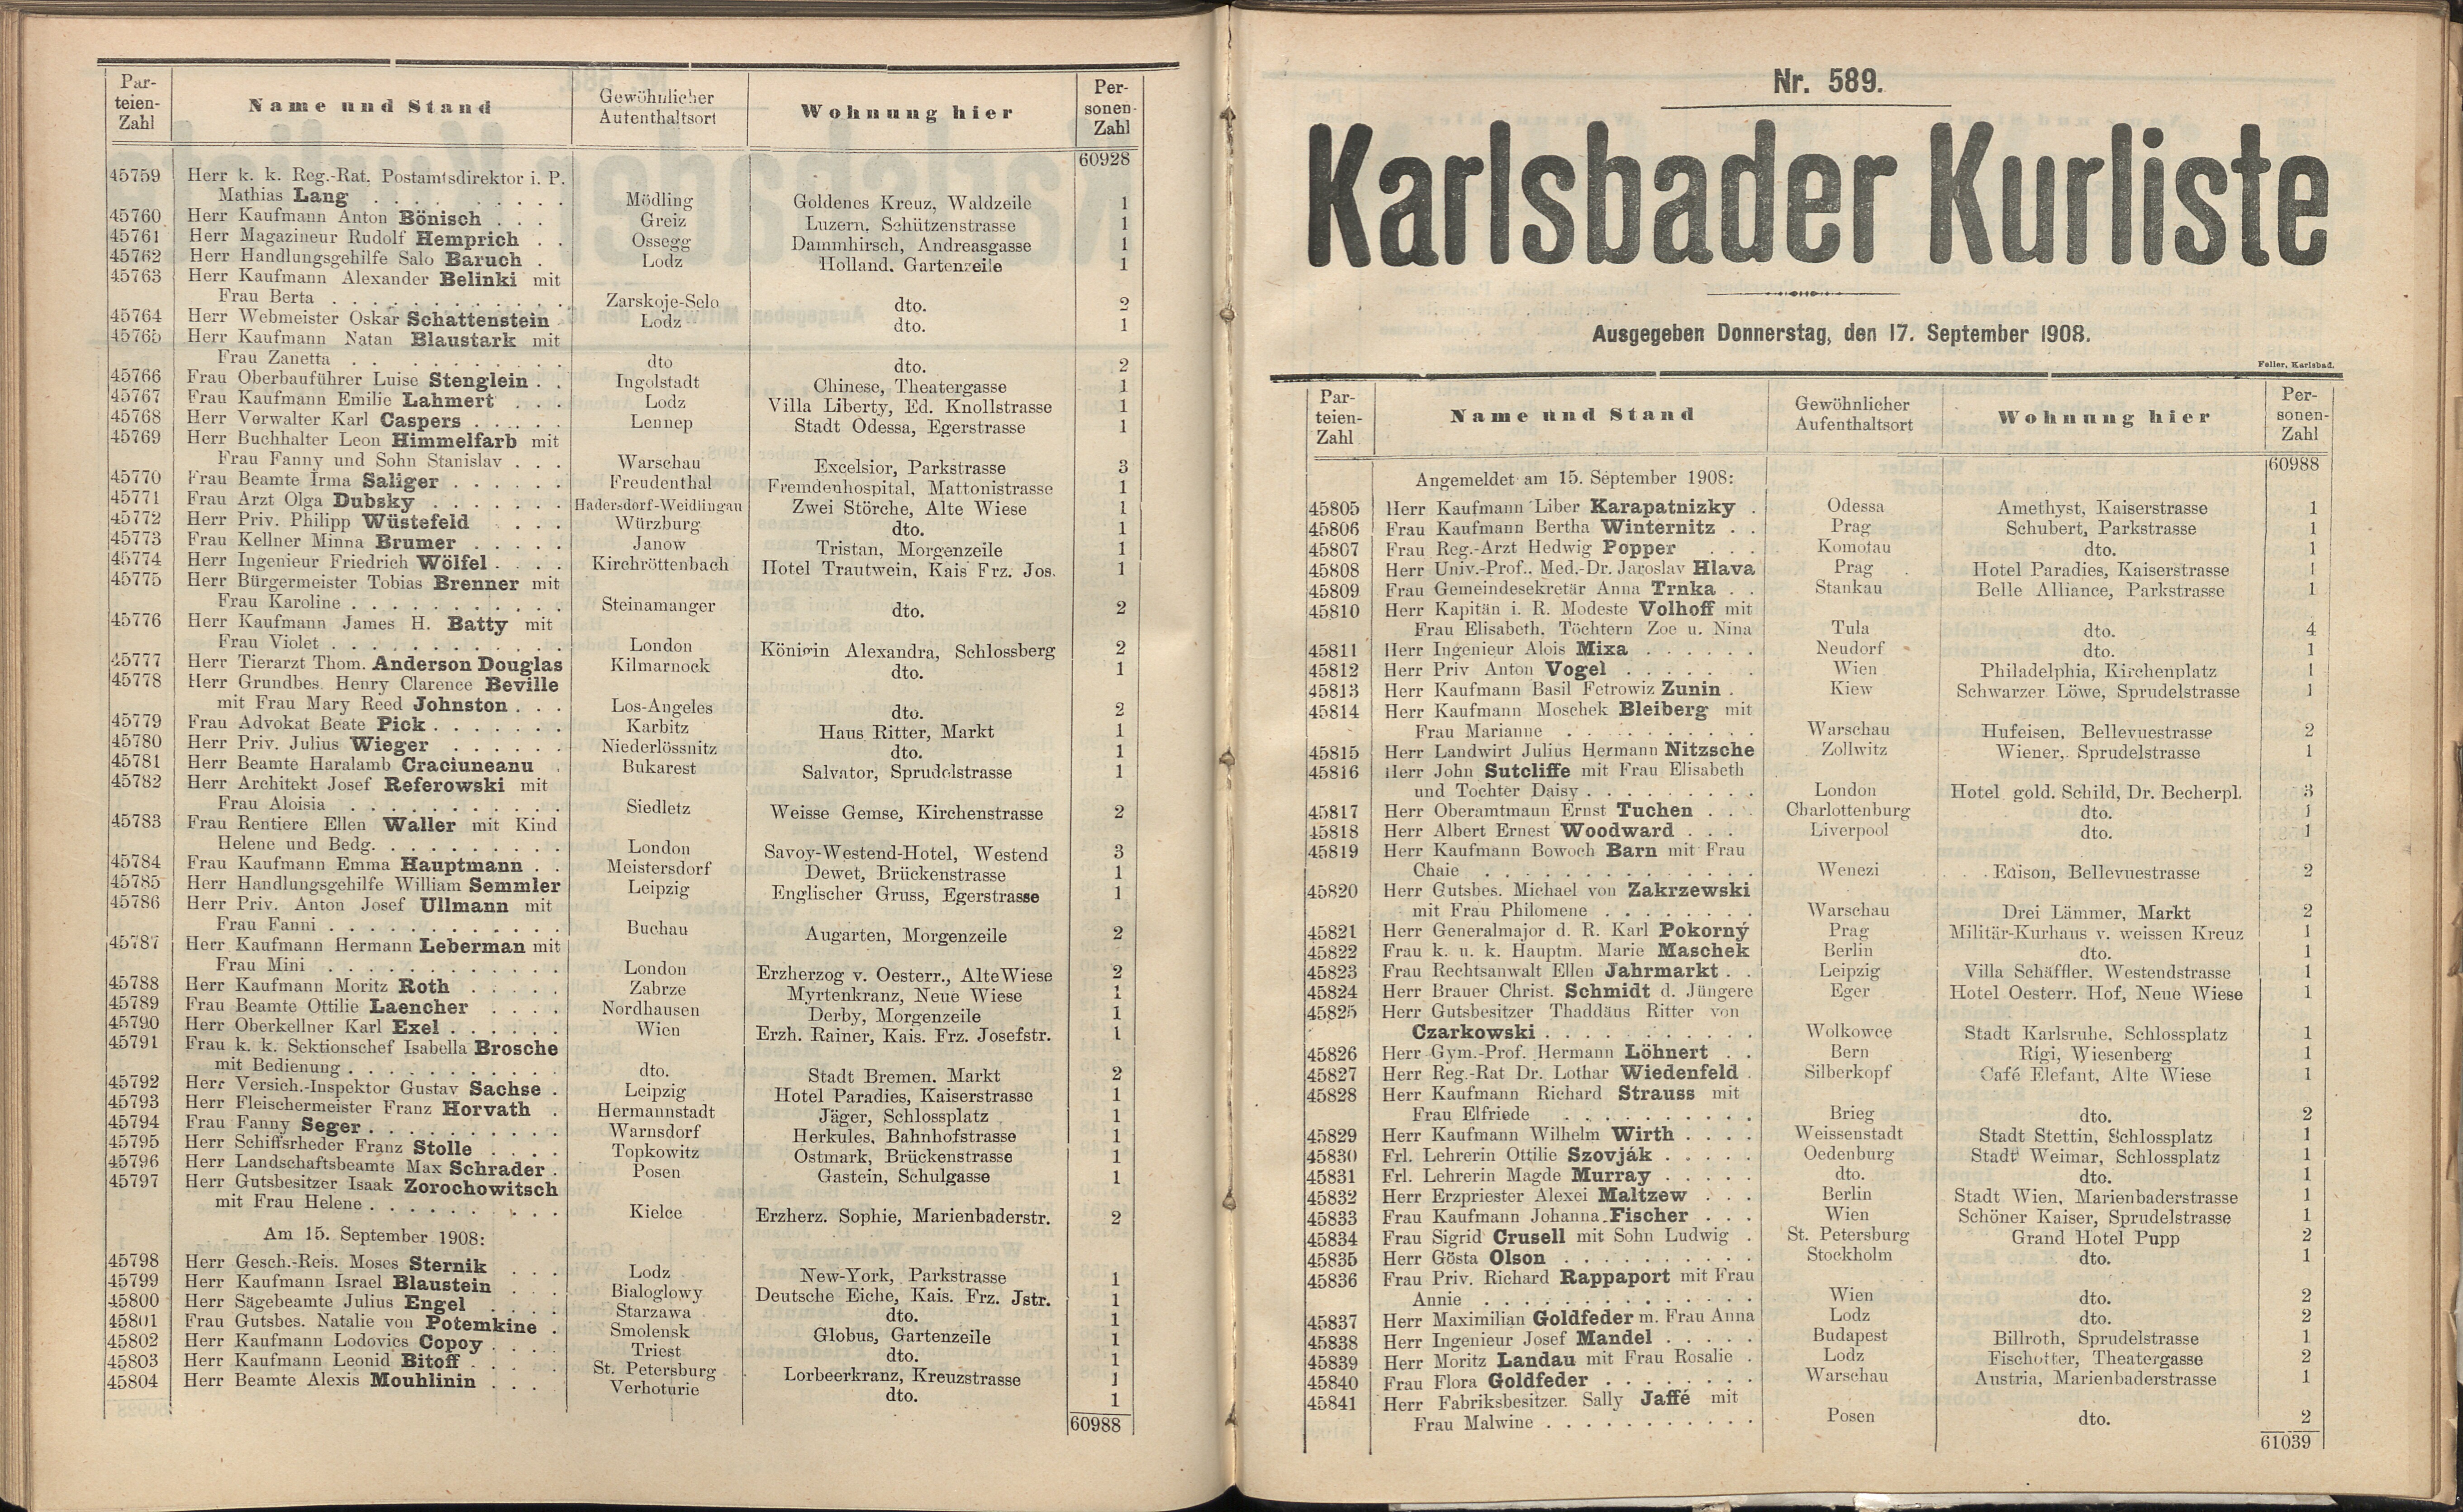 702. soap-kv_knihovna_karlsbader-kurliste-1908_7030